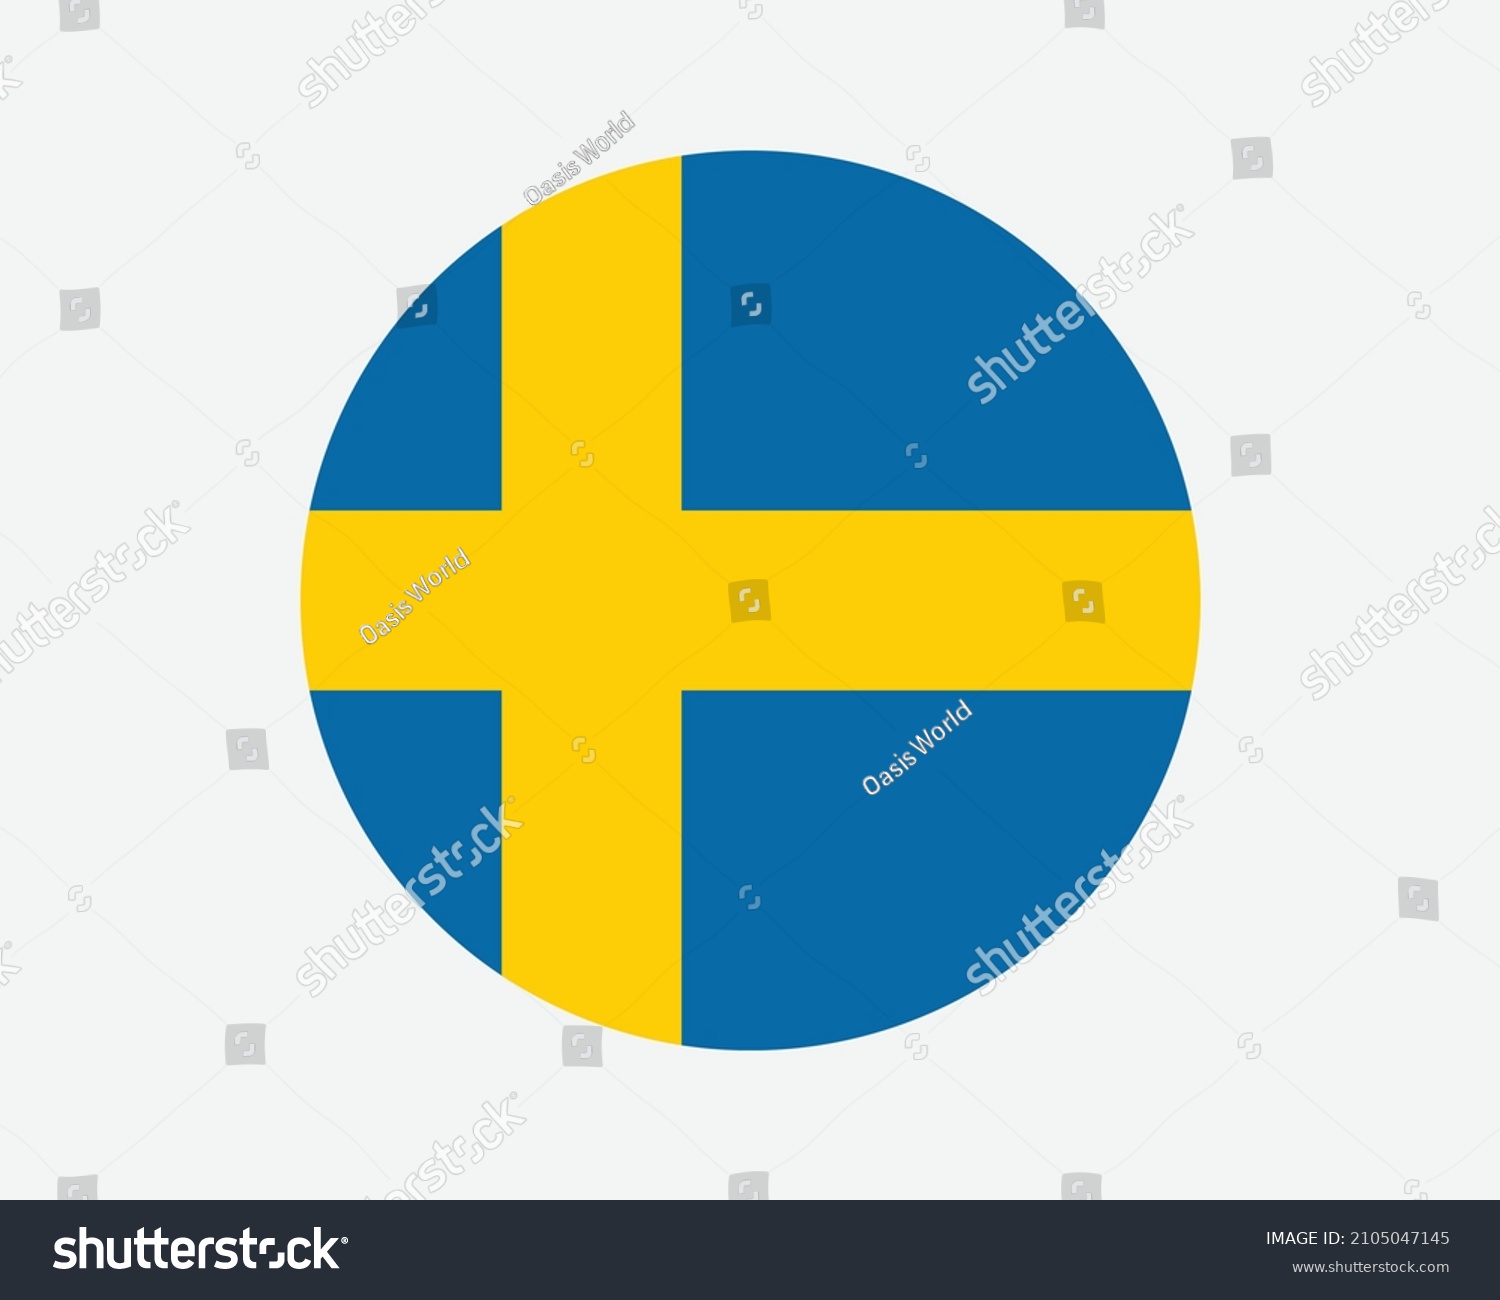 SVG of Sweden Round Country Flag. Swedish Circle National Flag. Kingdom of Sweden Circular Shape Button Banner. EPS Vector Illustration. svg